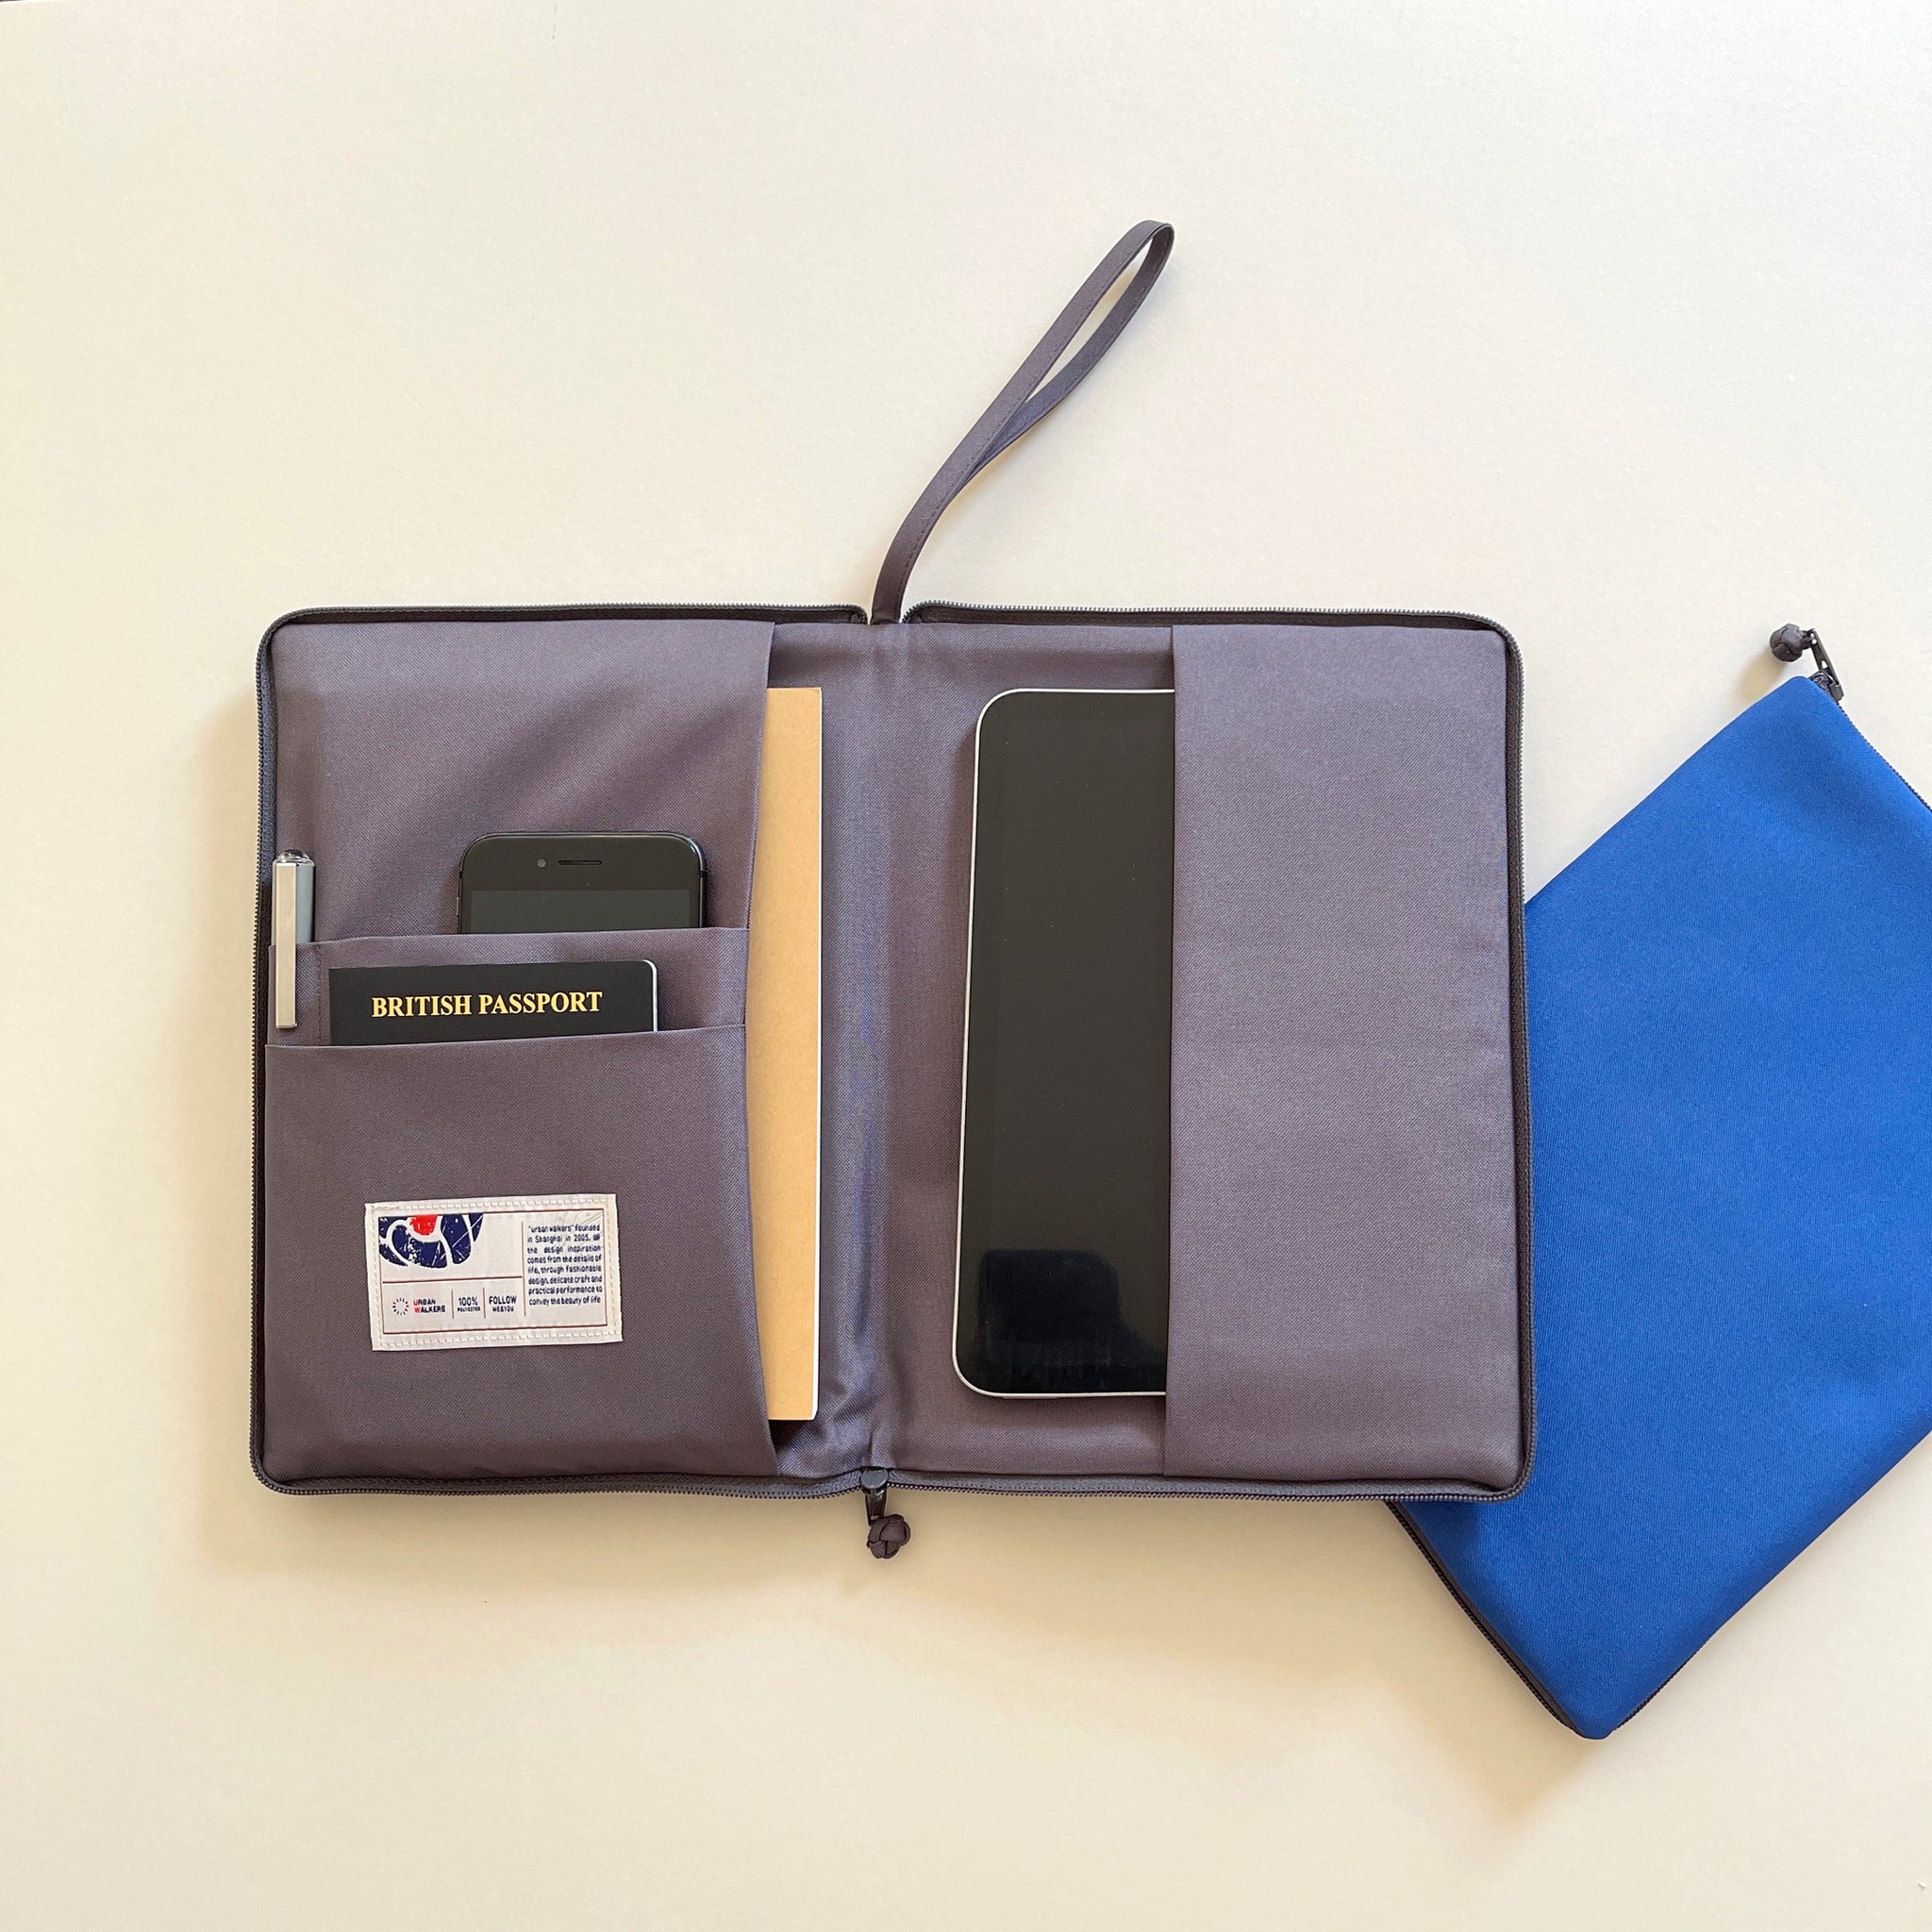 recycled iPad mini case/travel organizer in blue